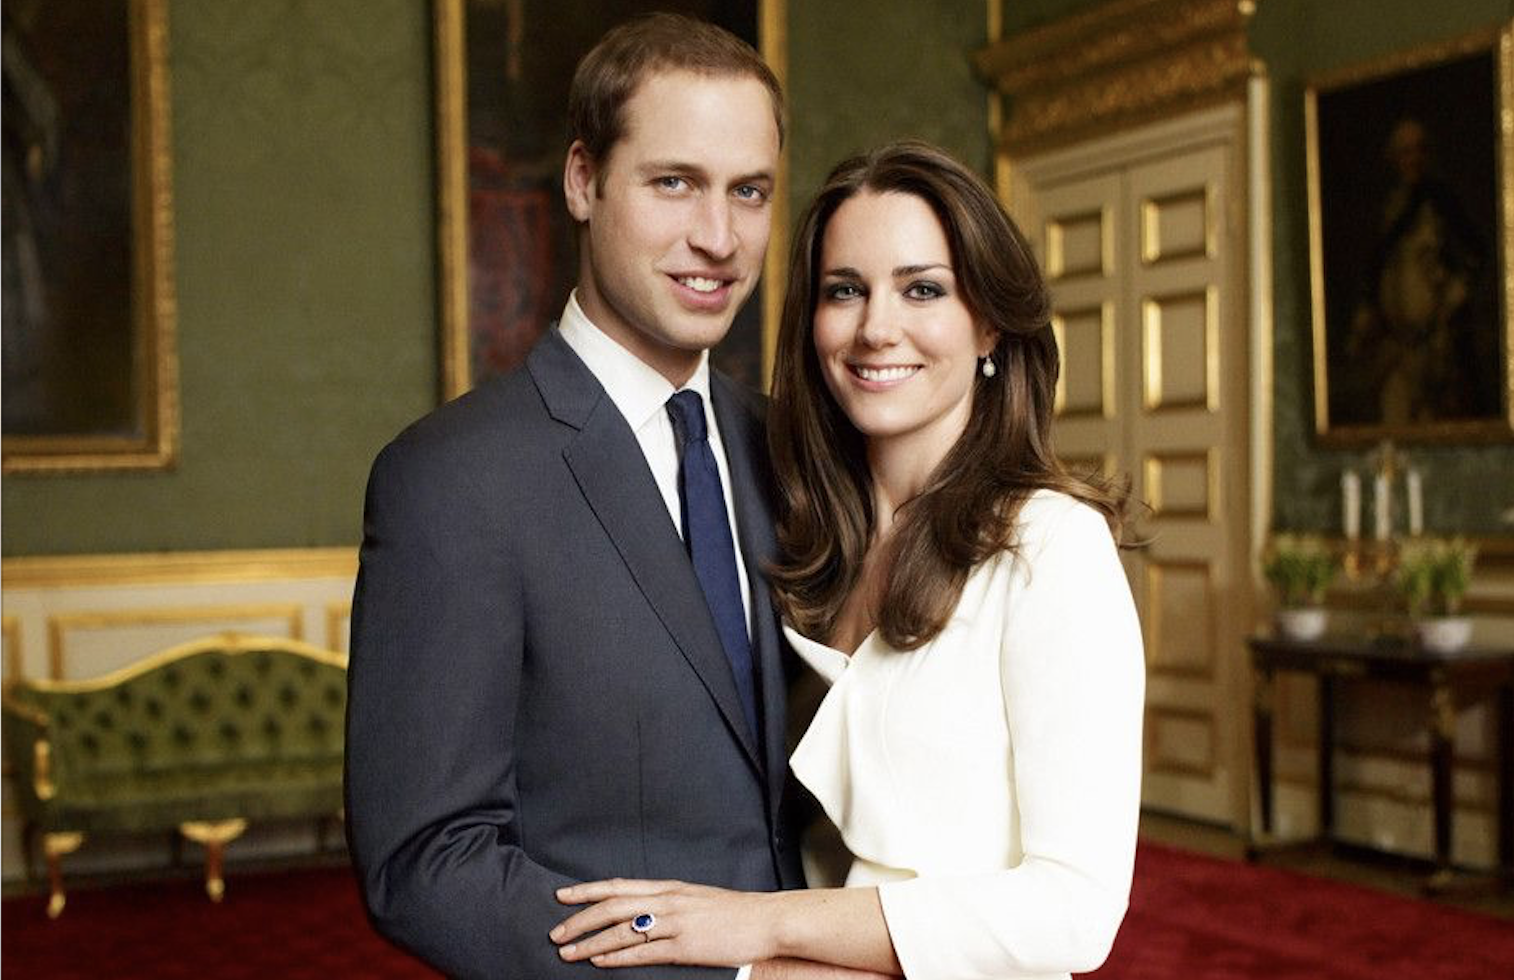 A Timeline Of Prince William's And Kate Middleton's Love - Wedded Wonderland